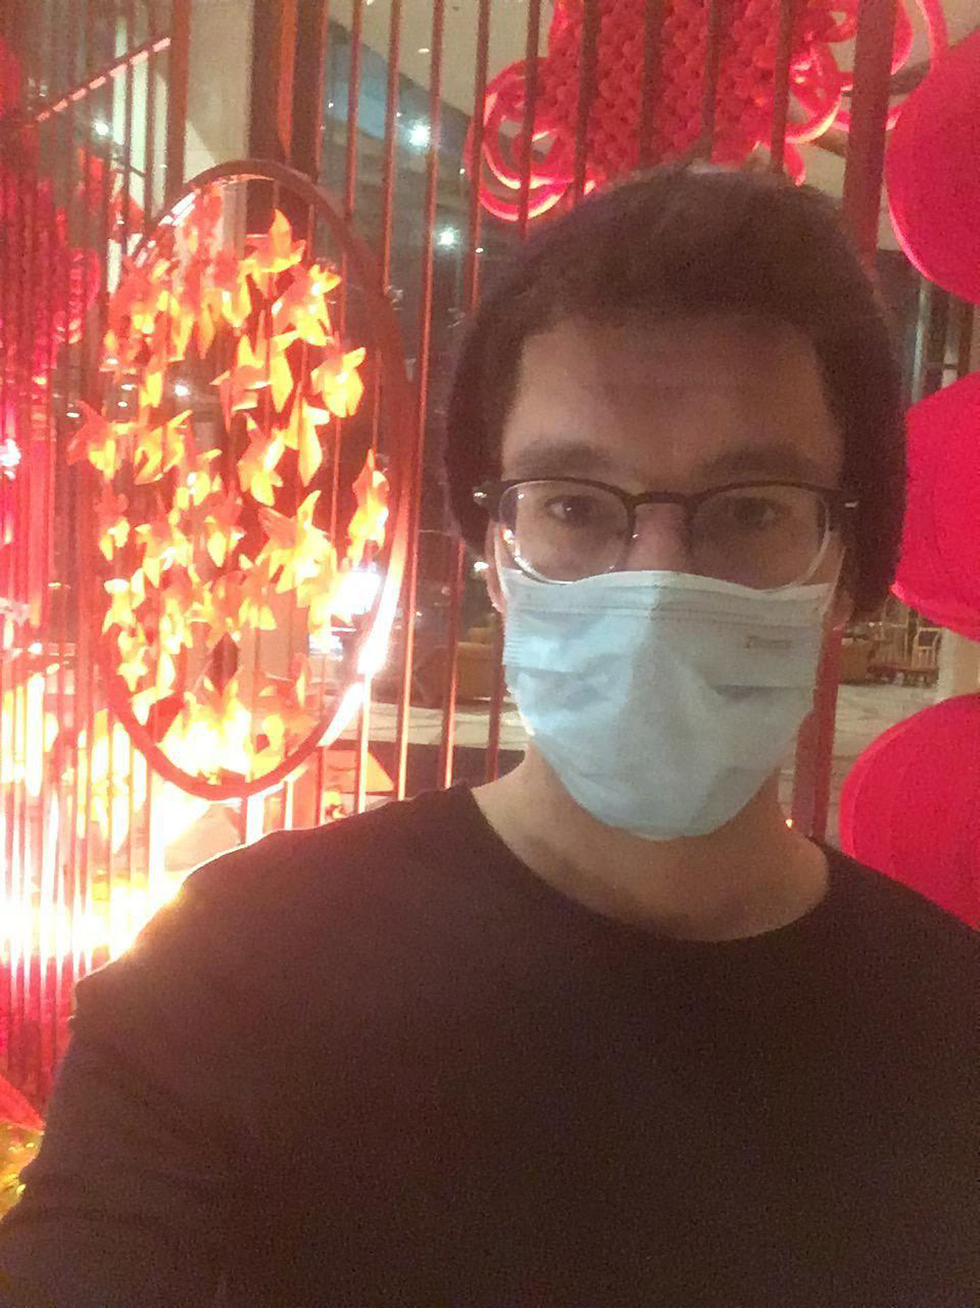 דניאל אדלסון שליח ynet  ו ידיעות אחרונות ב שנגחאי סין וירוס נגיף (צילום: דניאל אדלסון)